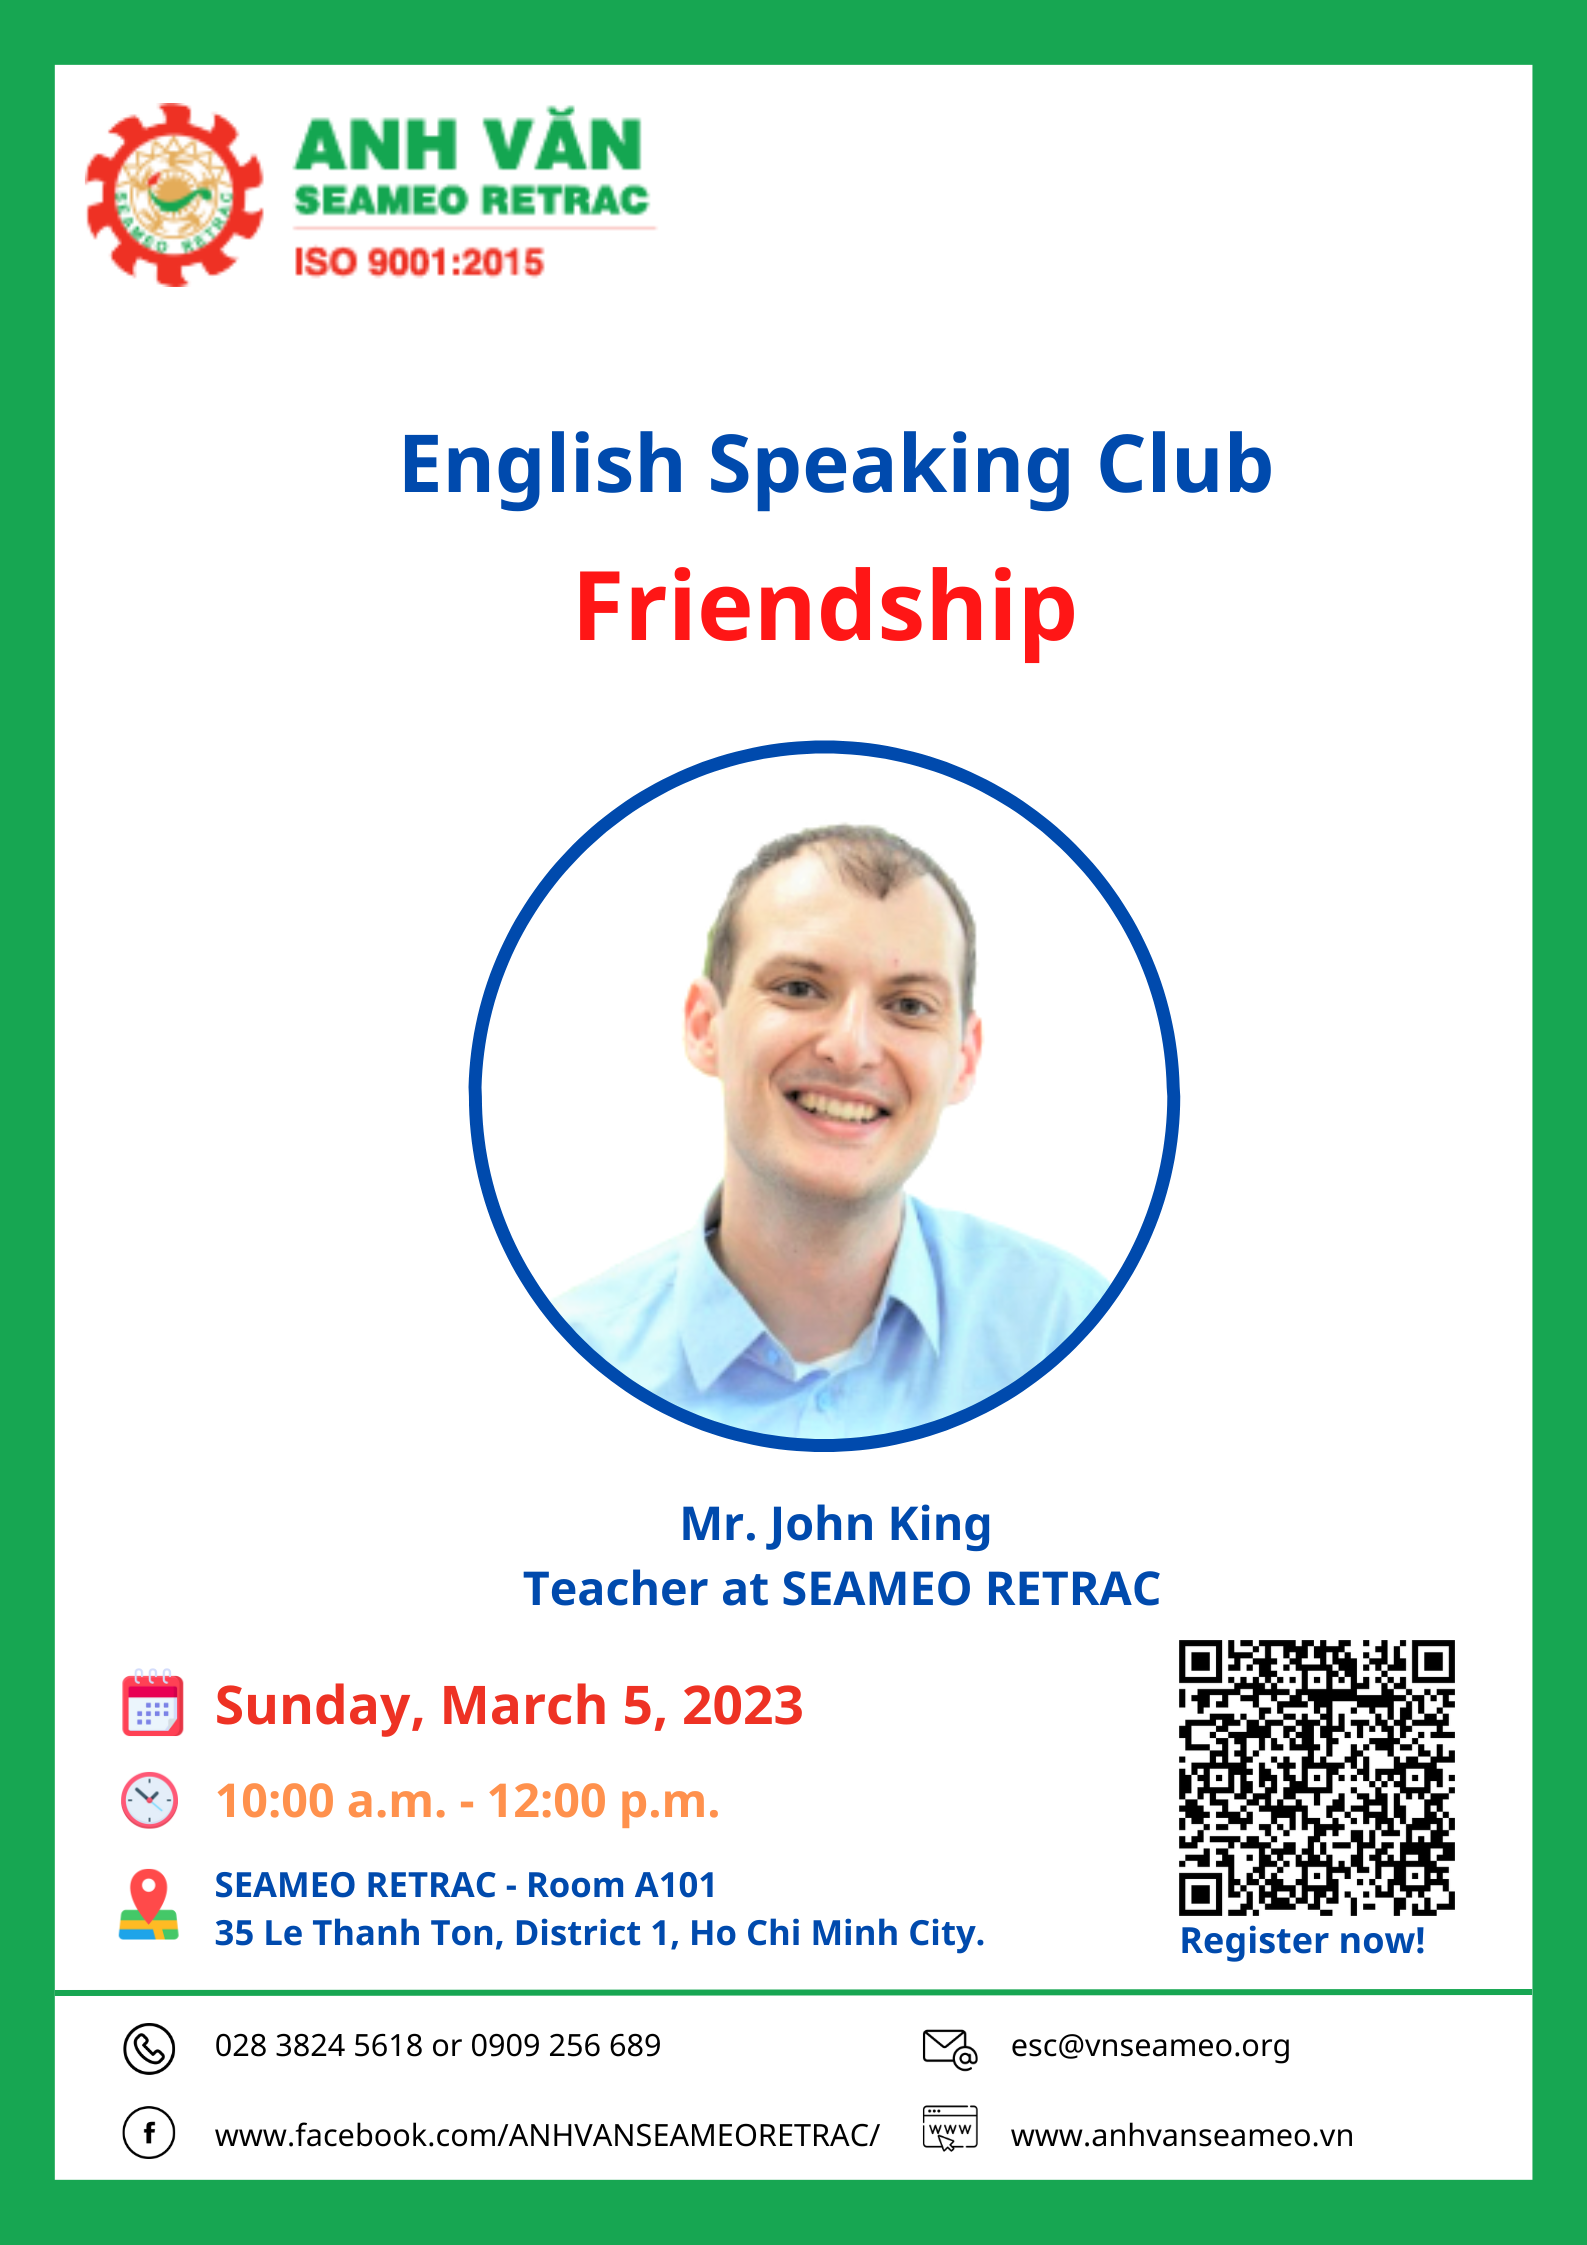 English Speaking Club titled “Friendship”